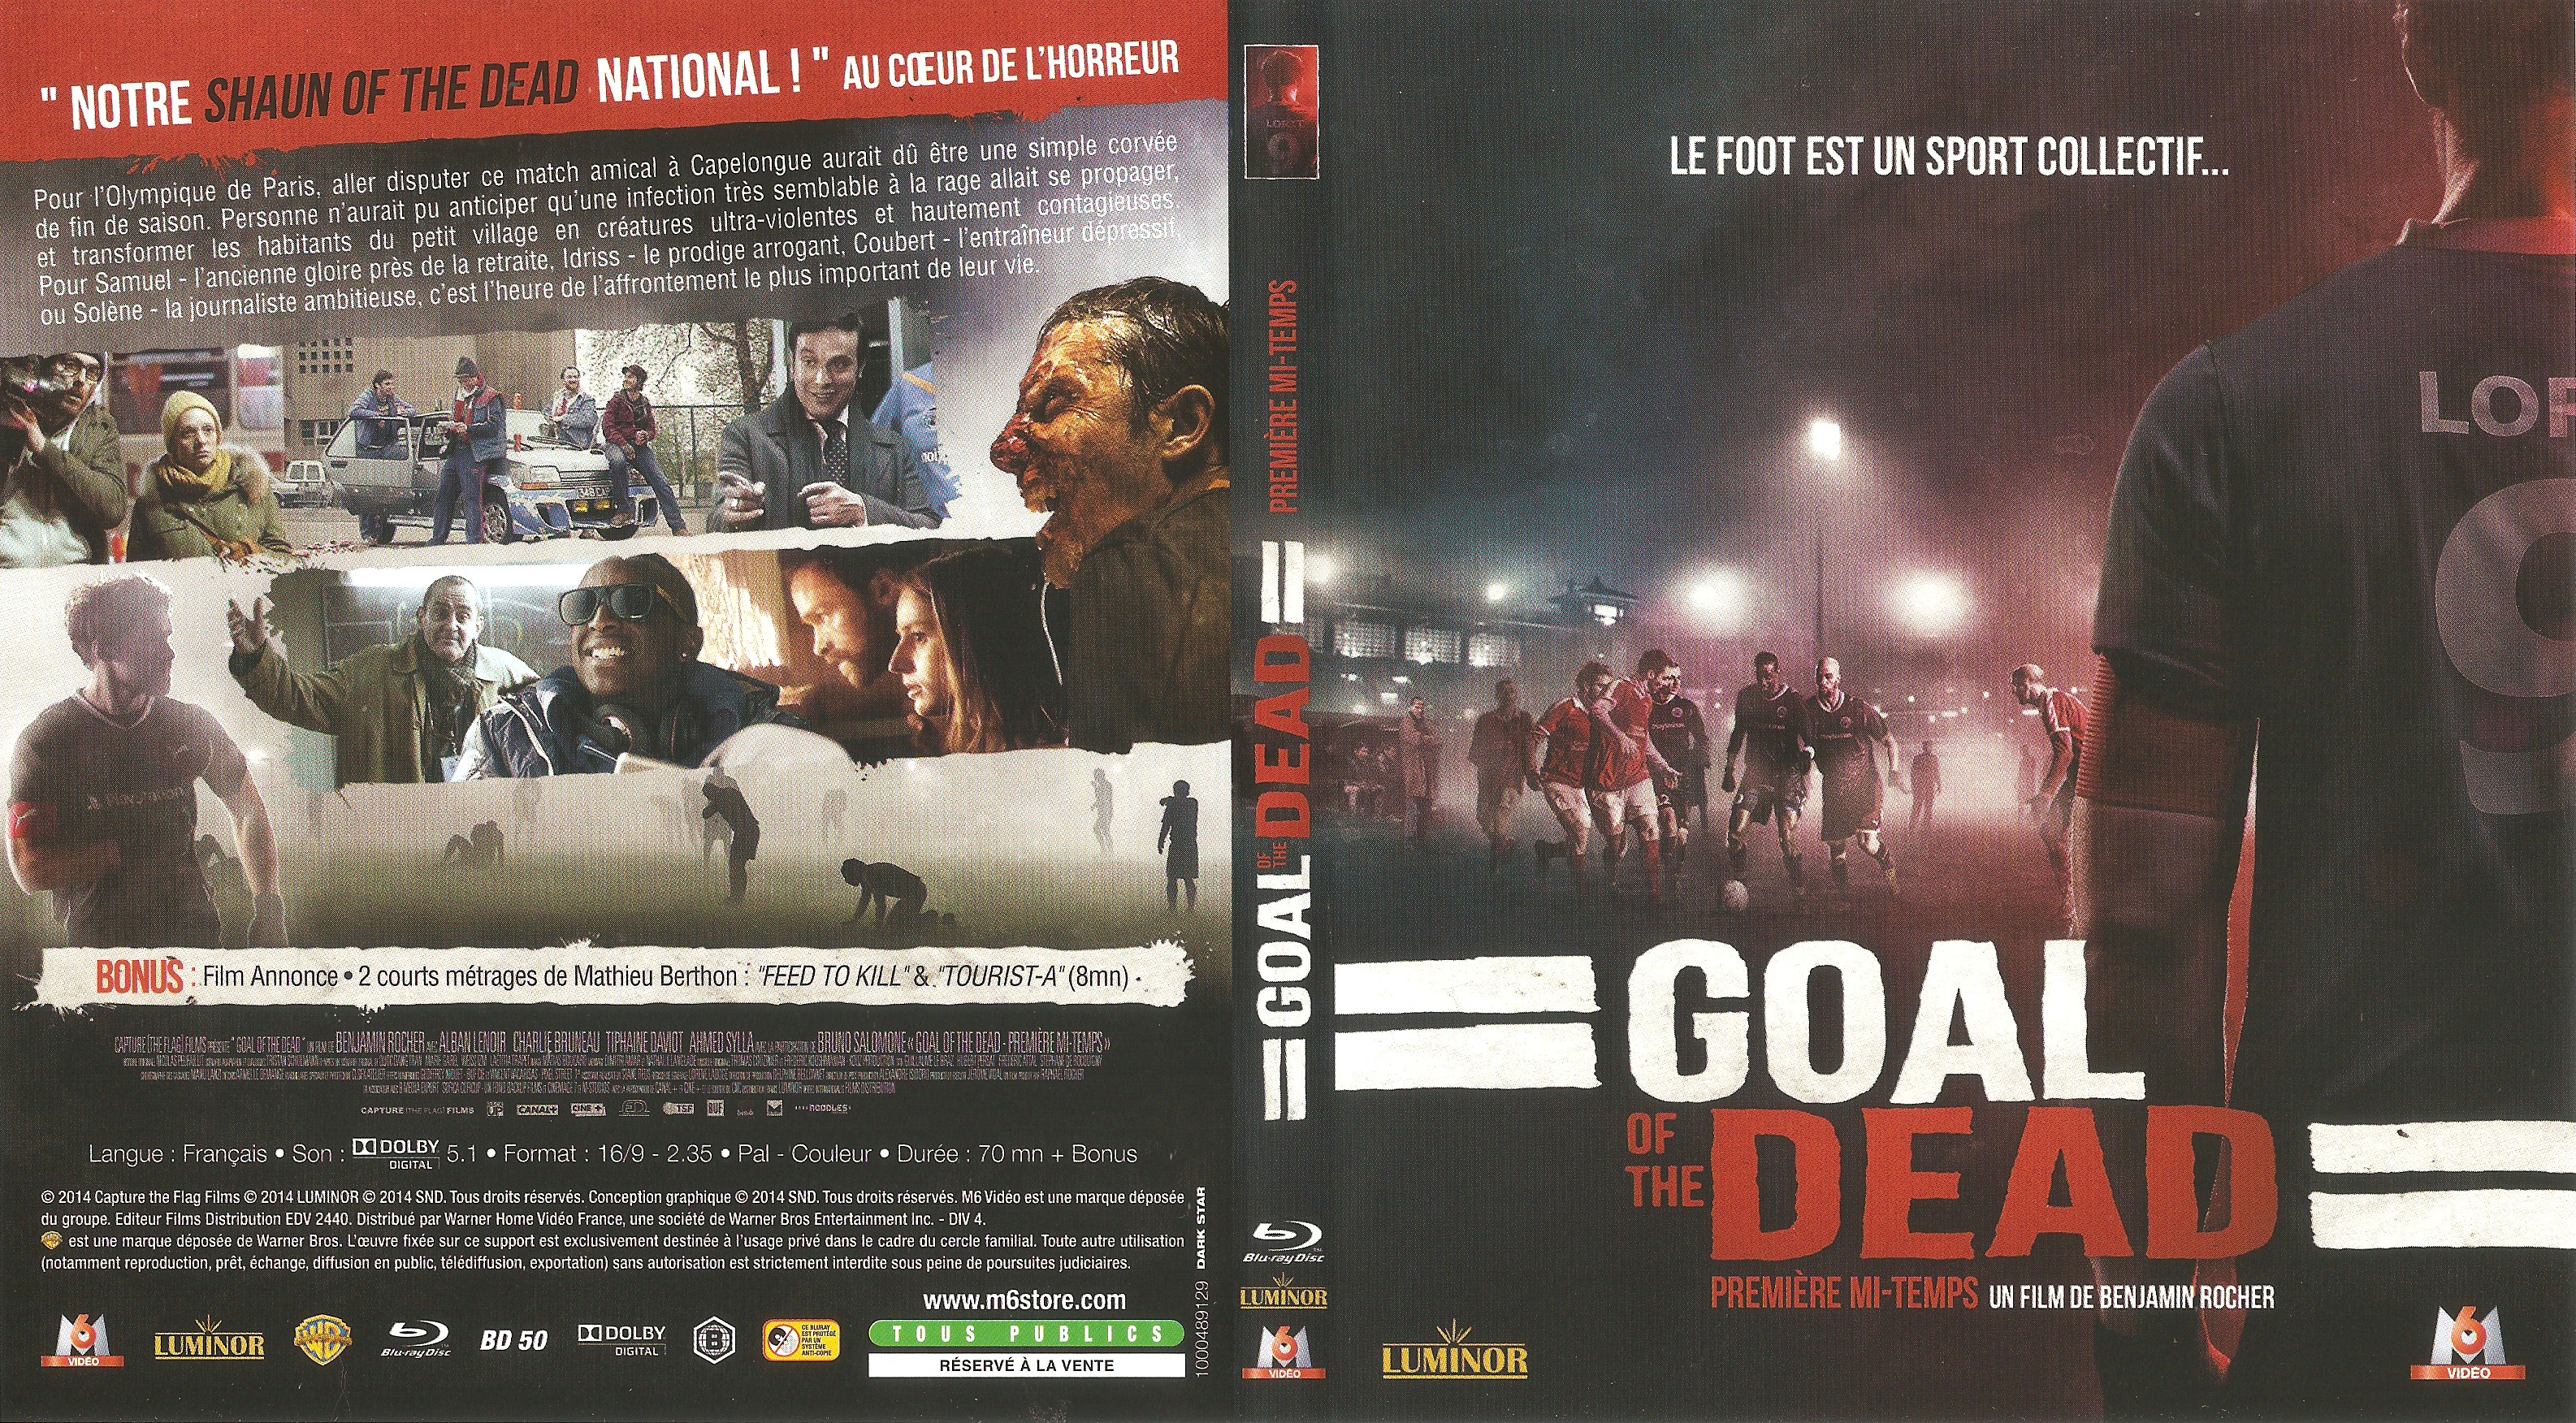 Jaquette DVD Goal of the dead Premire mi-temps (BLU-RAY)